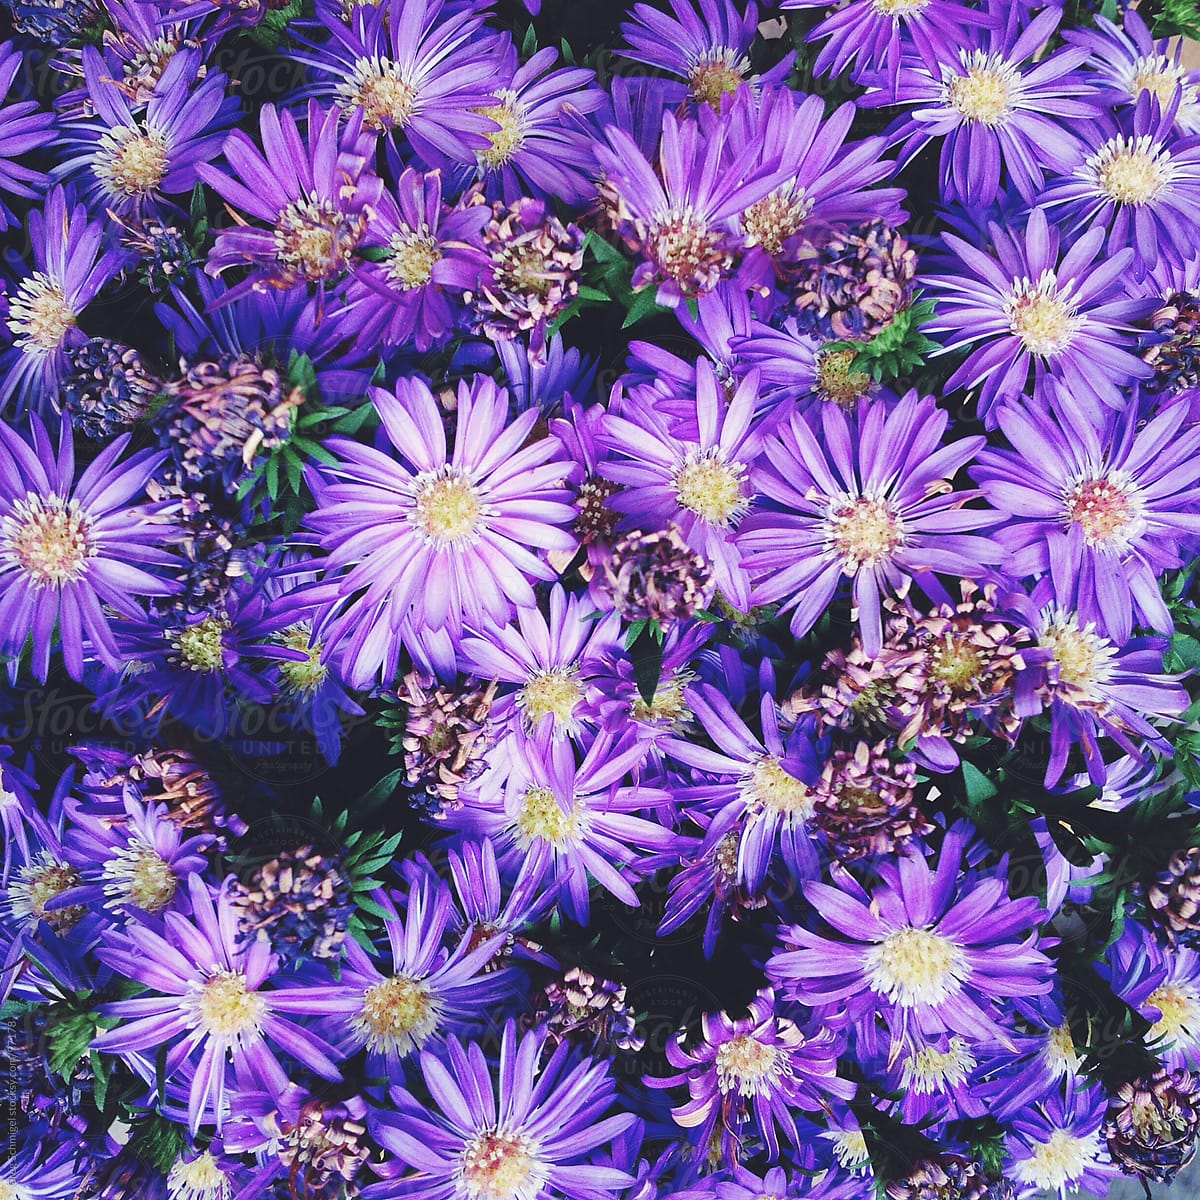 A bunch of fresh purple flowers